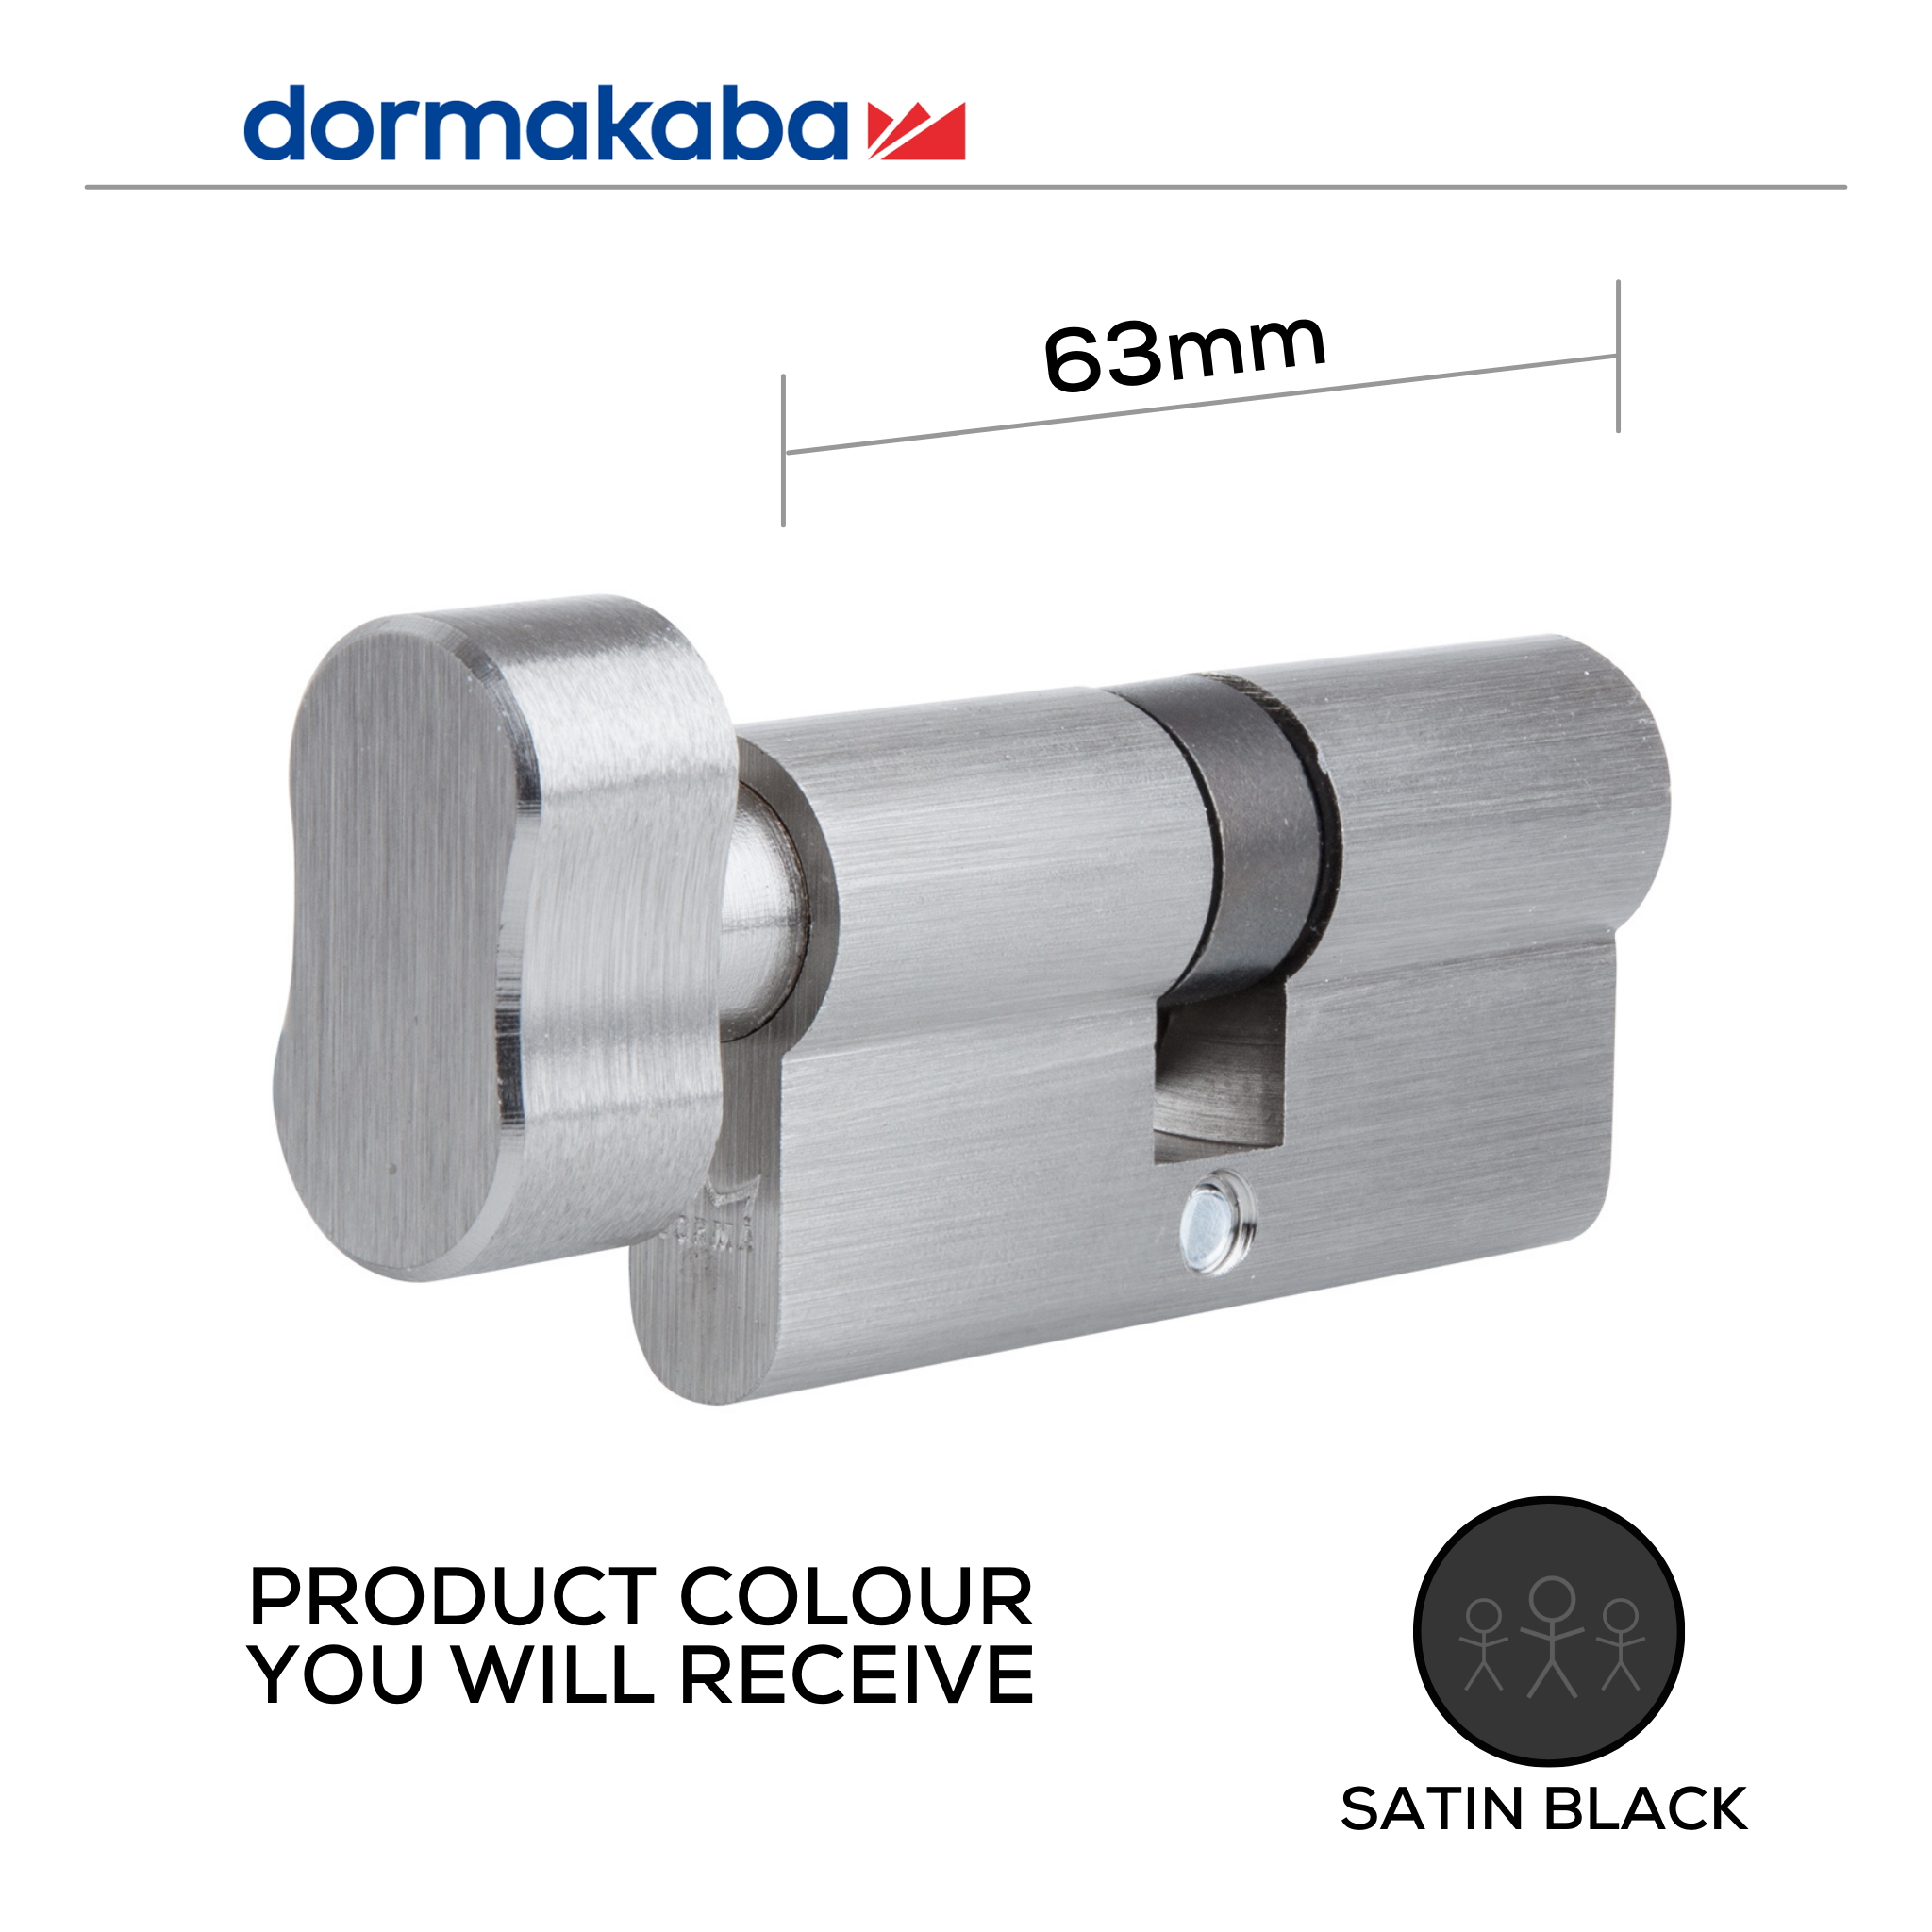 DKC206302 KD, 63mm (l), Knob, Cylinder, Keyed Different, 5 Pin, Satin Black, DORMAKABA